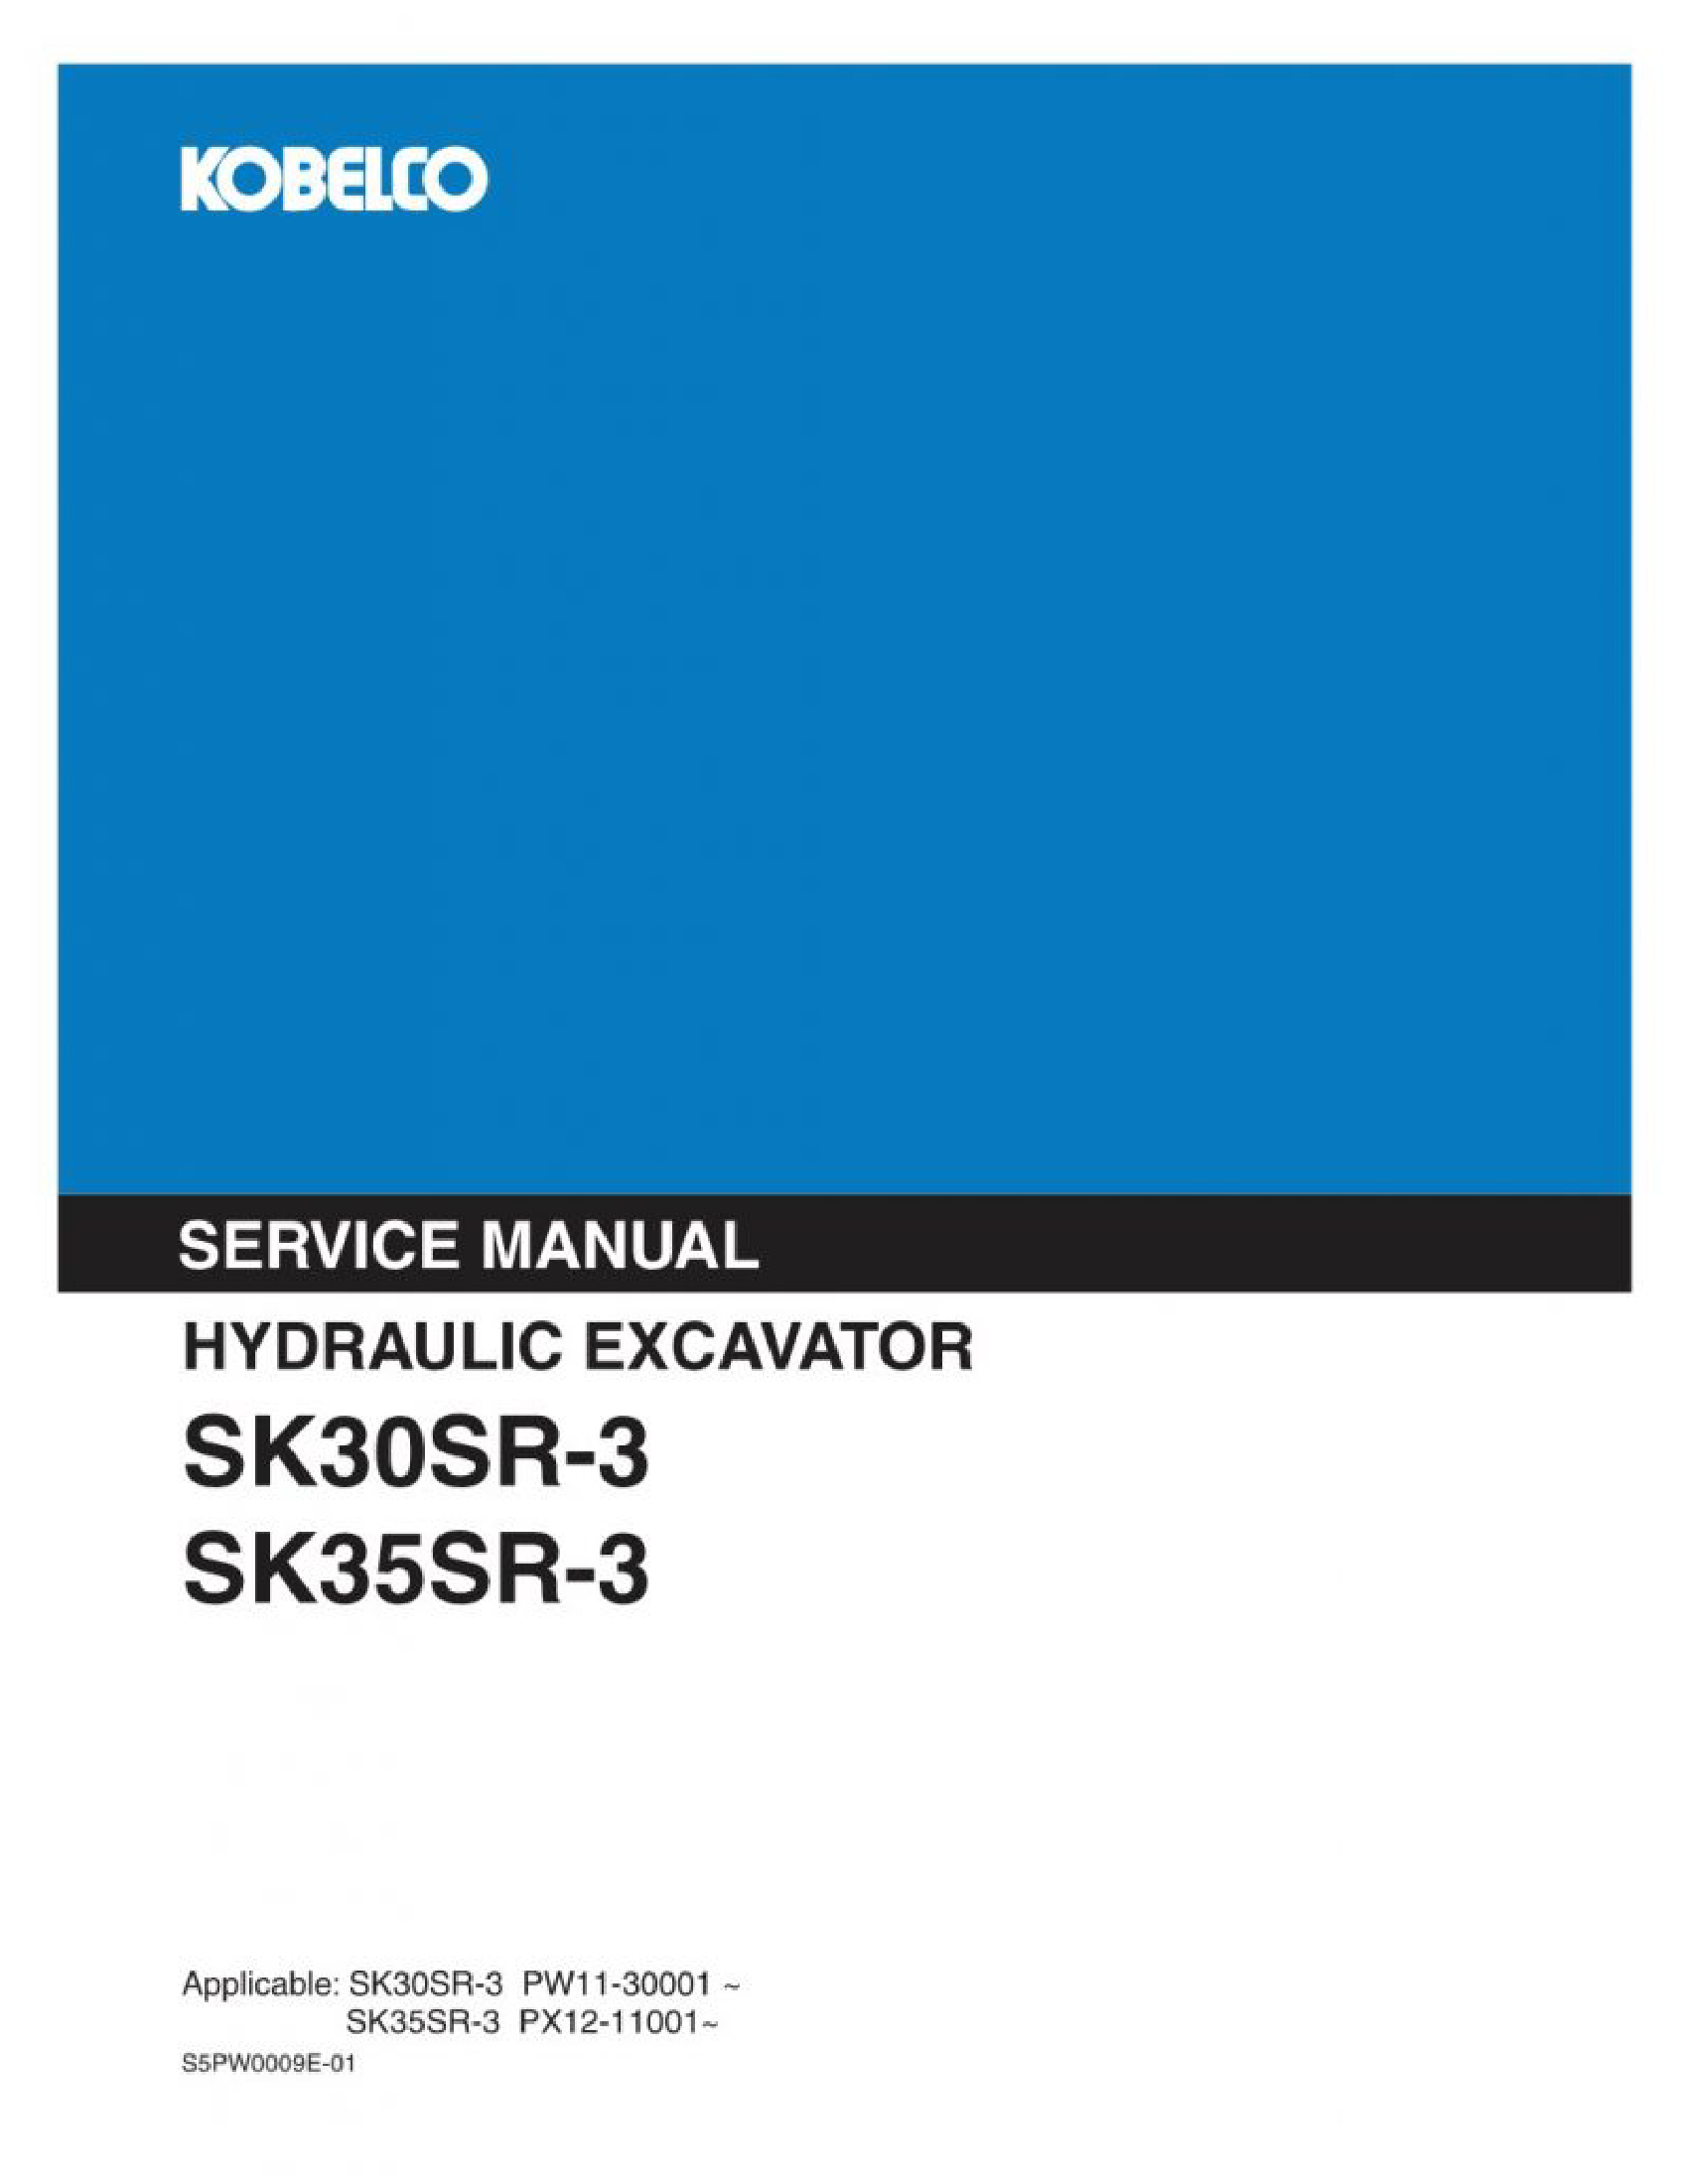 Kobelco SK30SR-3 Hydraulic Excavator manual